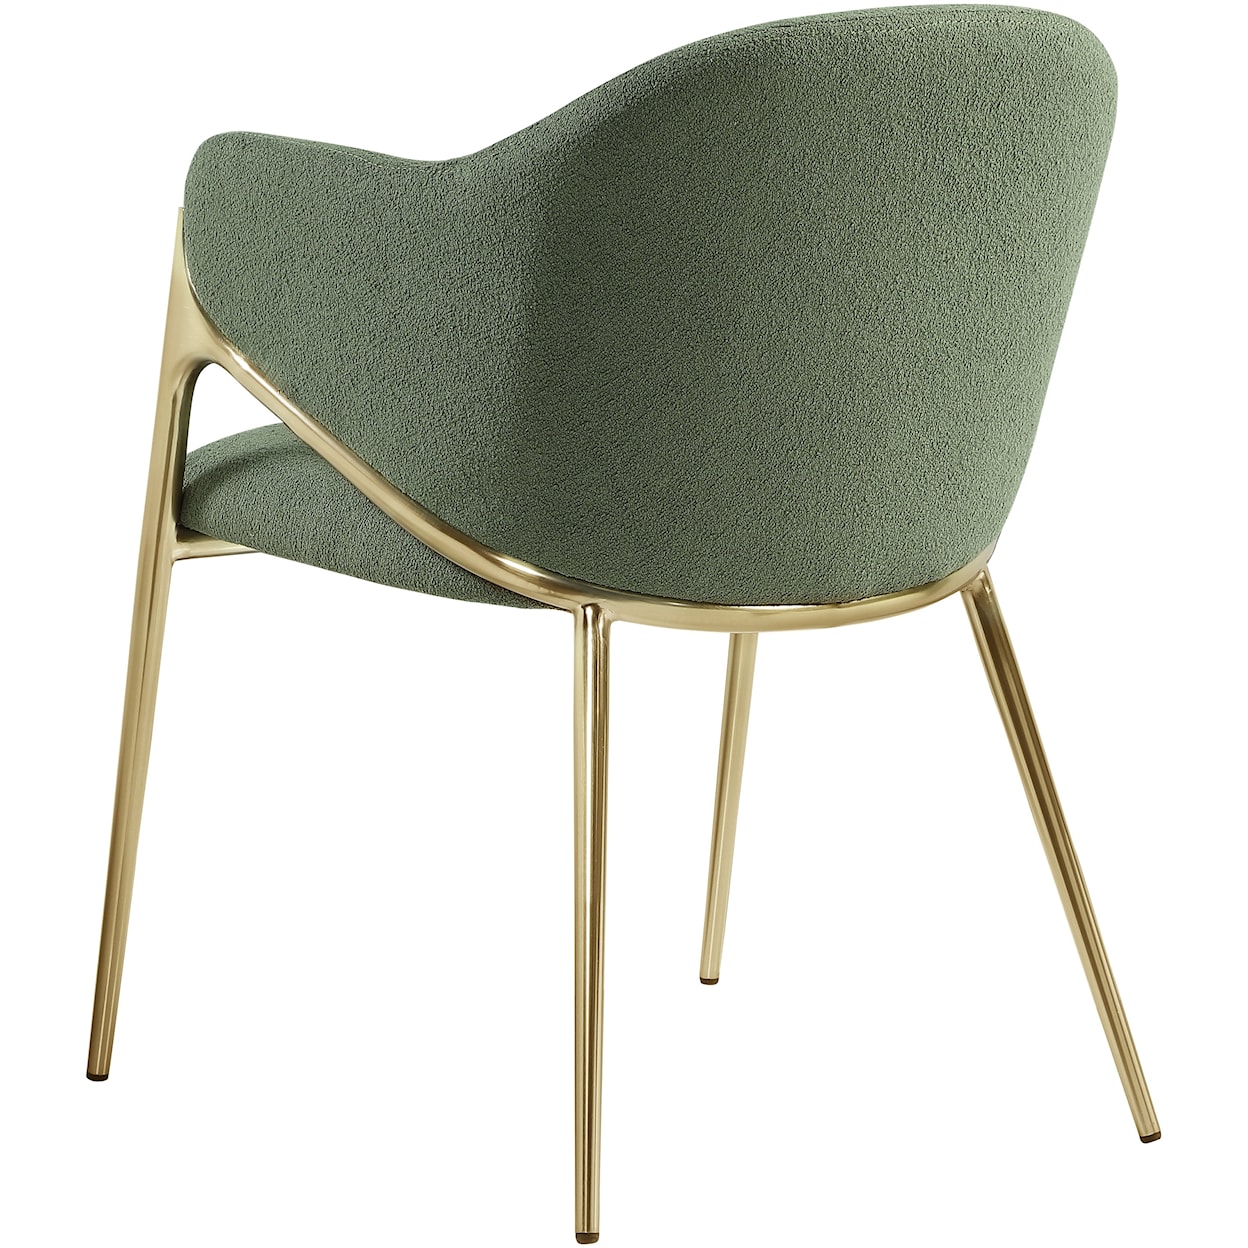 Meridian Furniture Nial Dining Chair